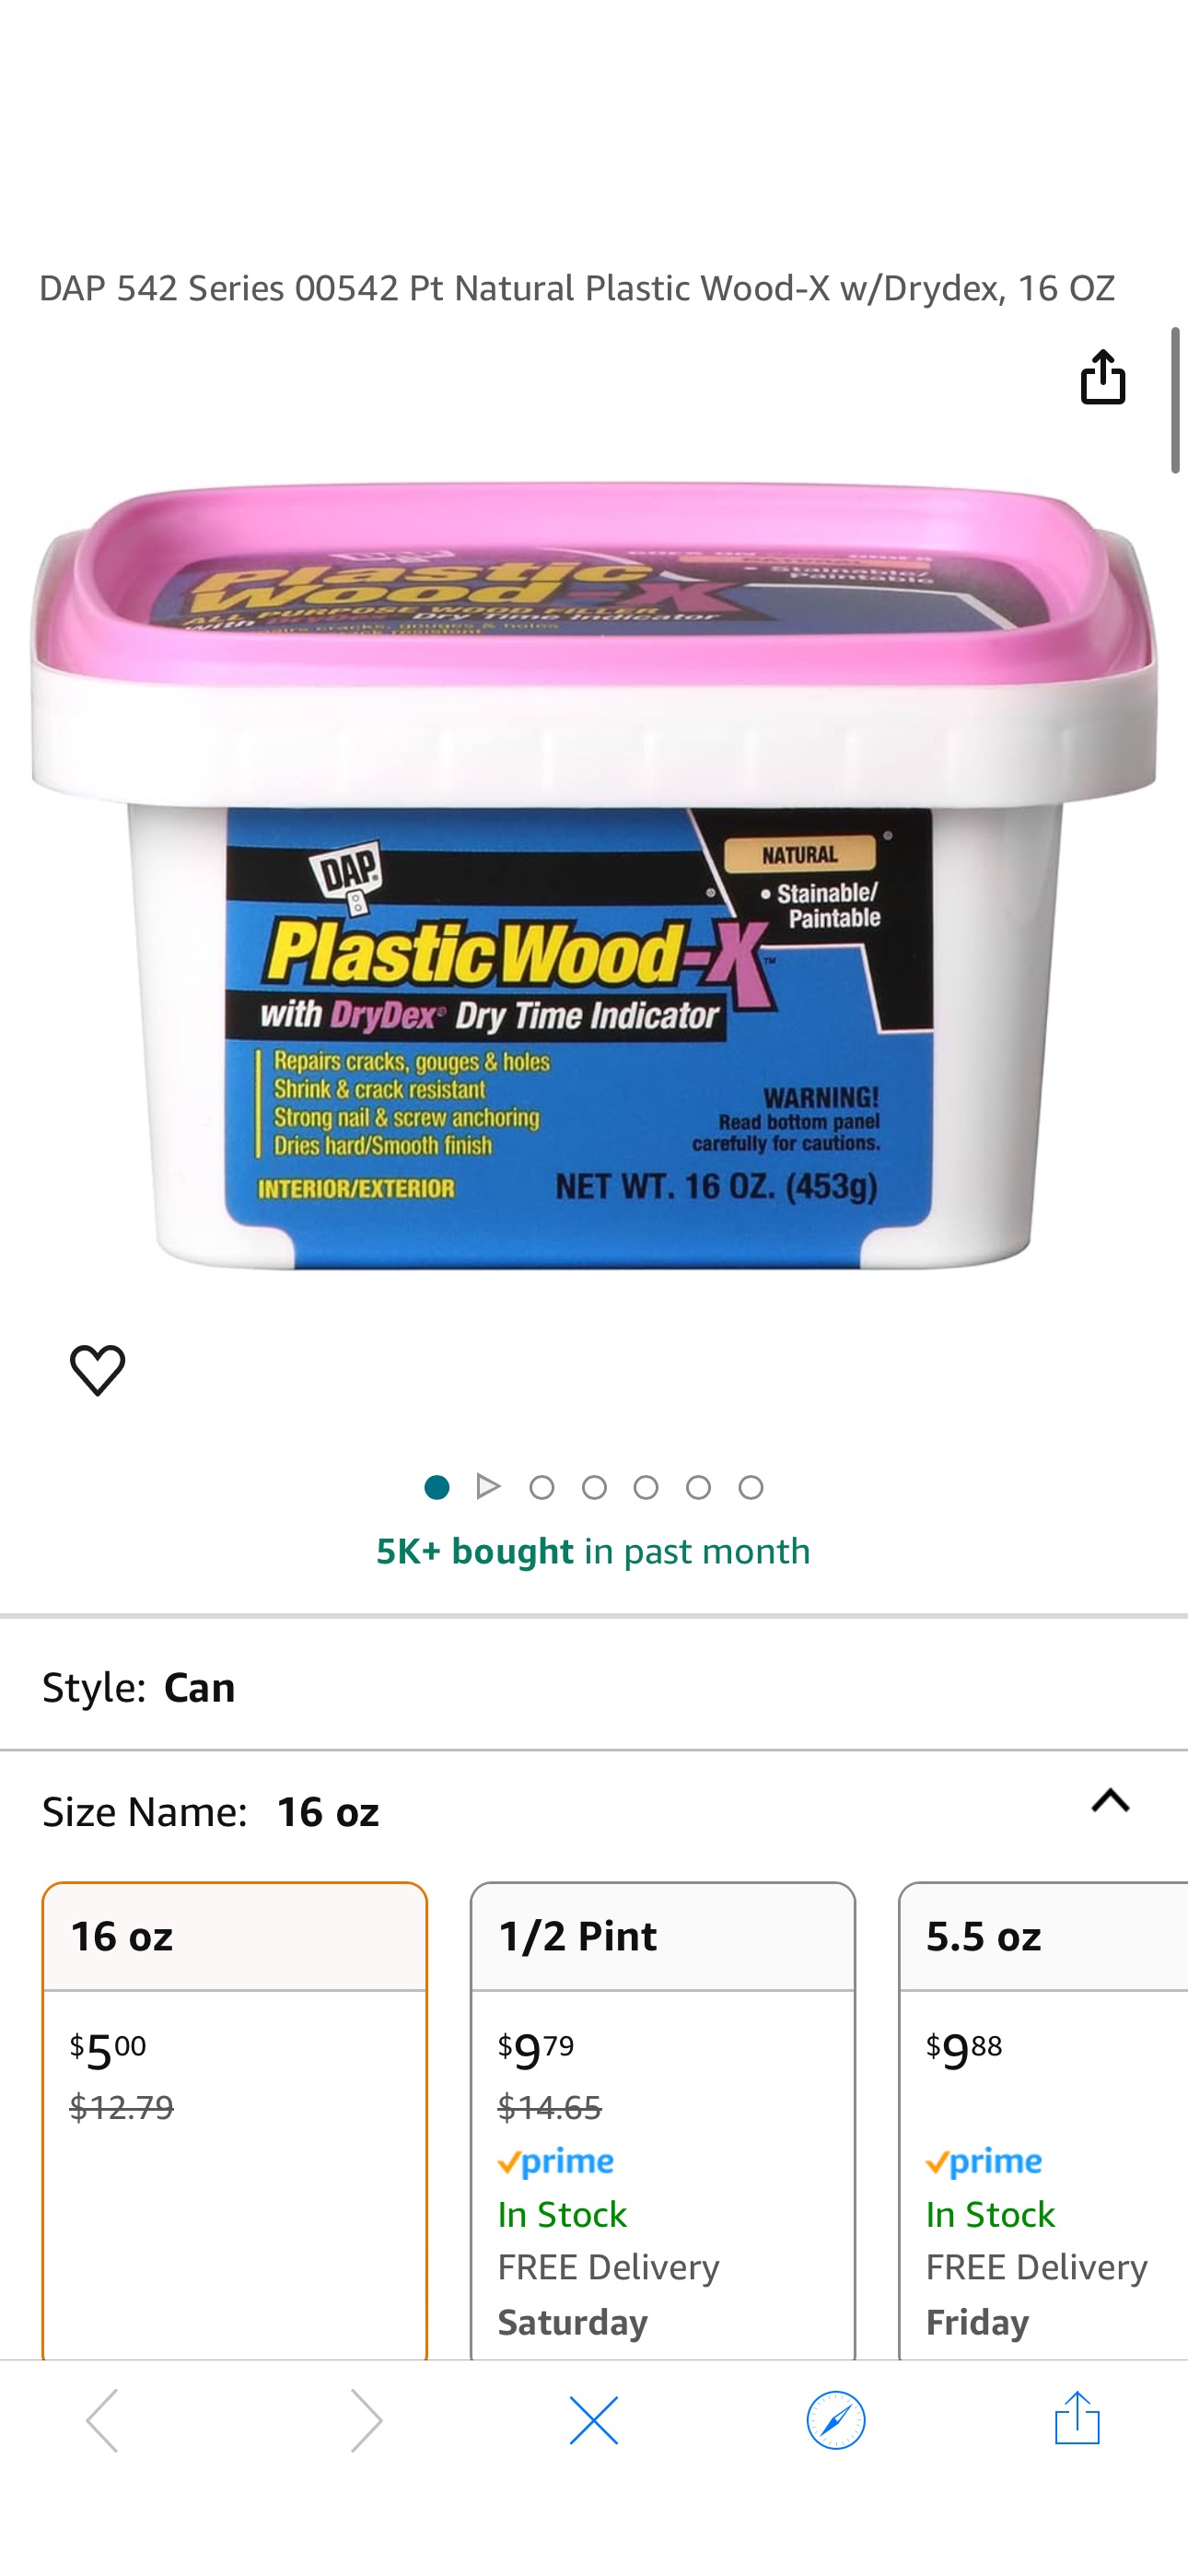 Amazon.com: DAP 542 Series 00542 Pt Natural Plastic Wood-X w/Drydex, 16 OZ : Everything Else